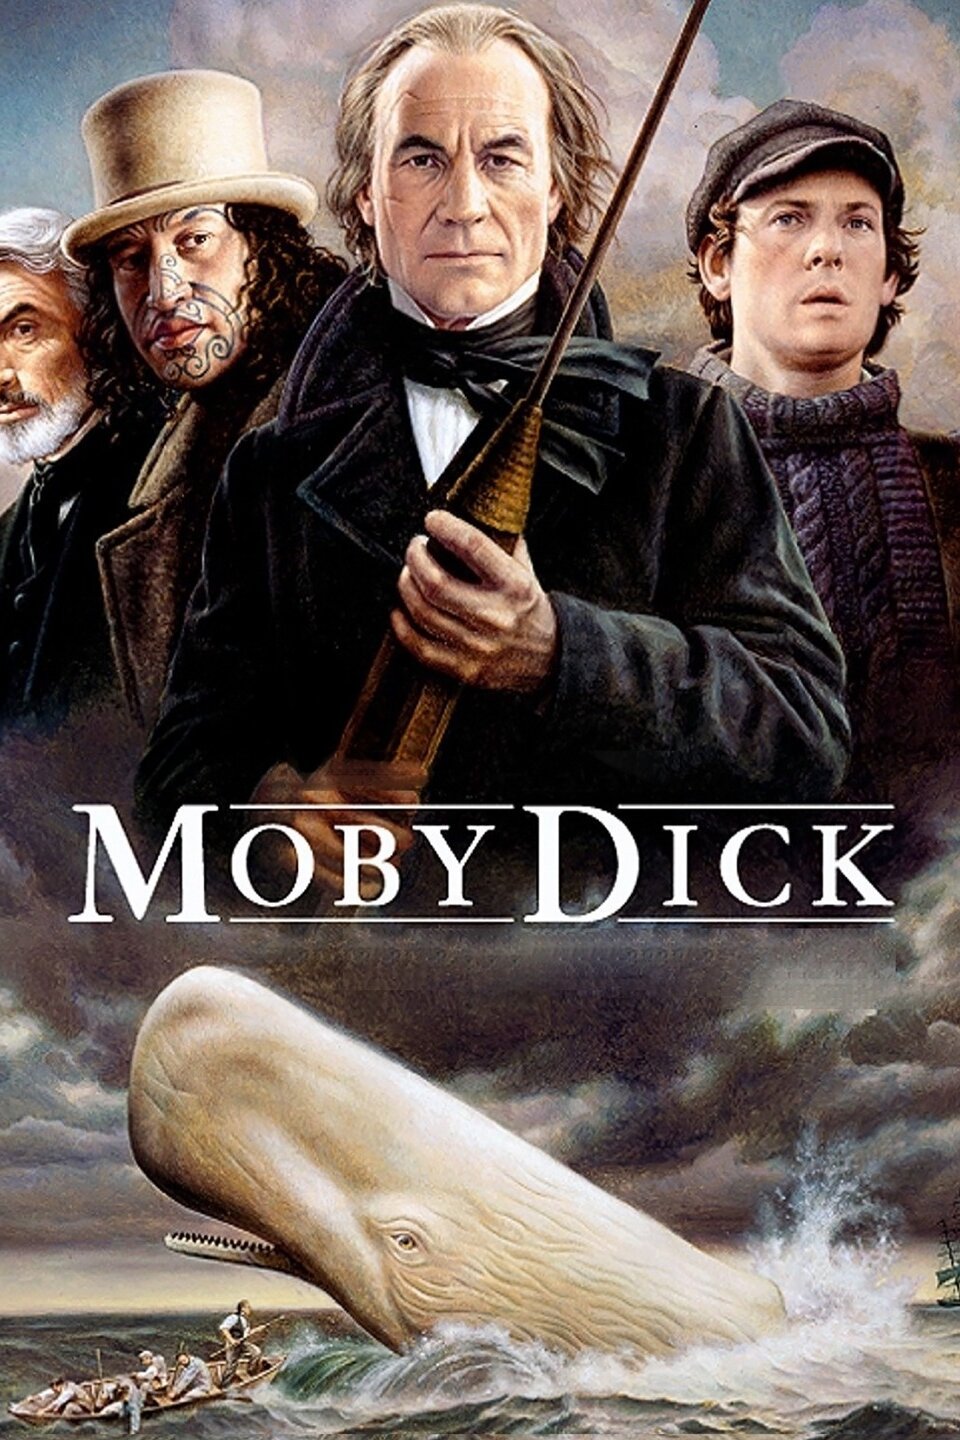 Moby dick season